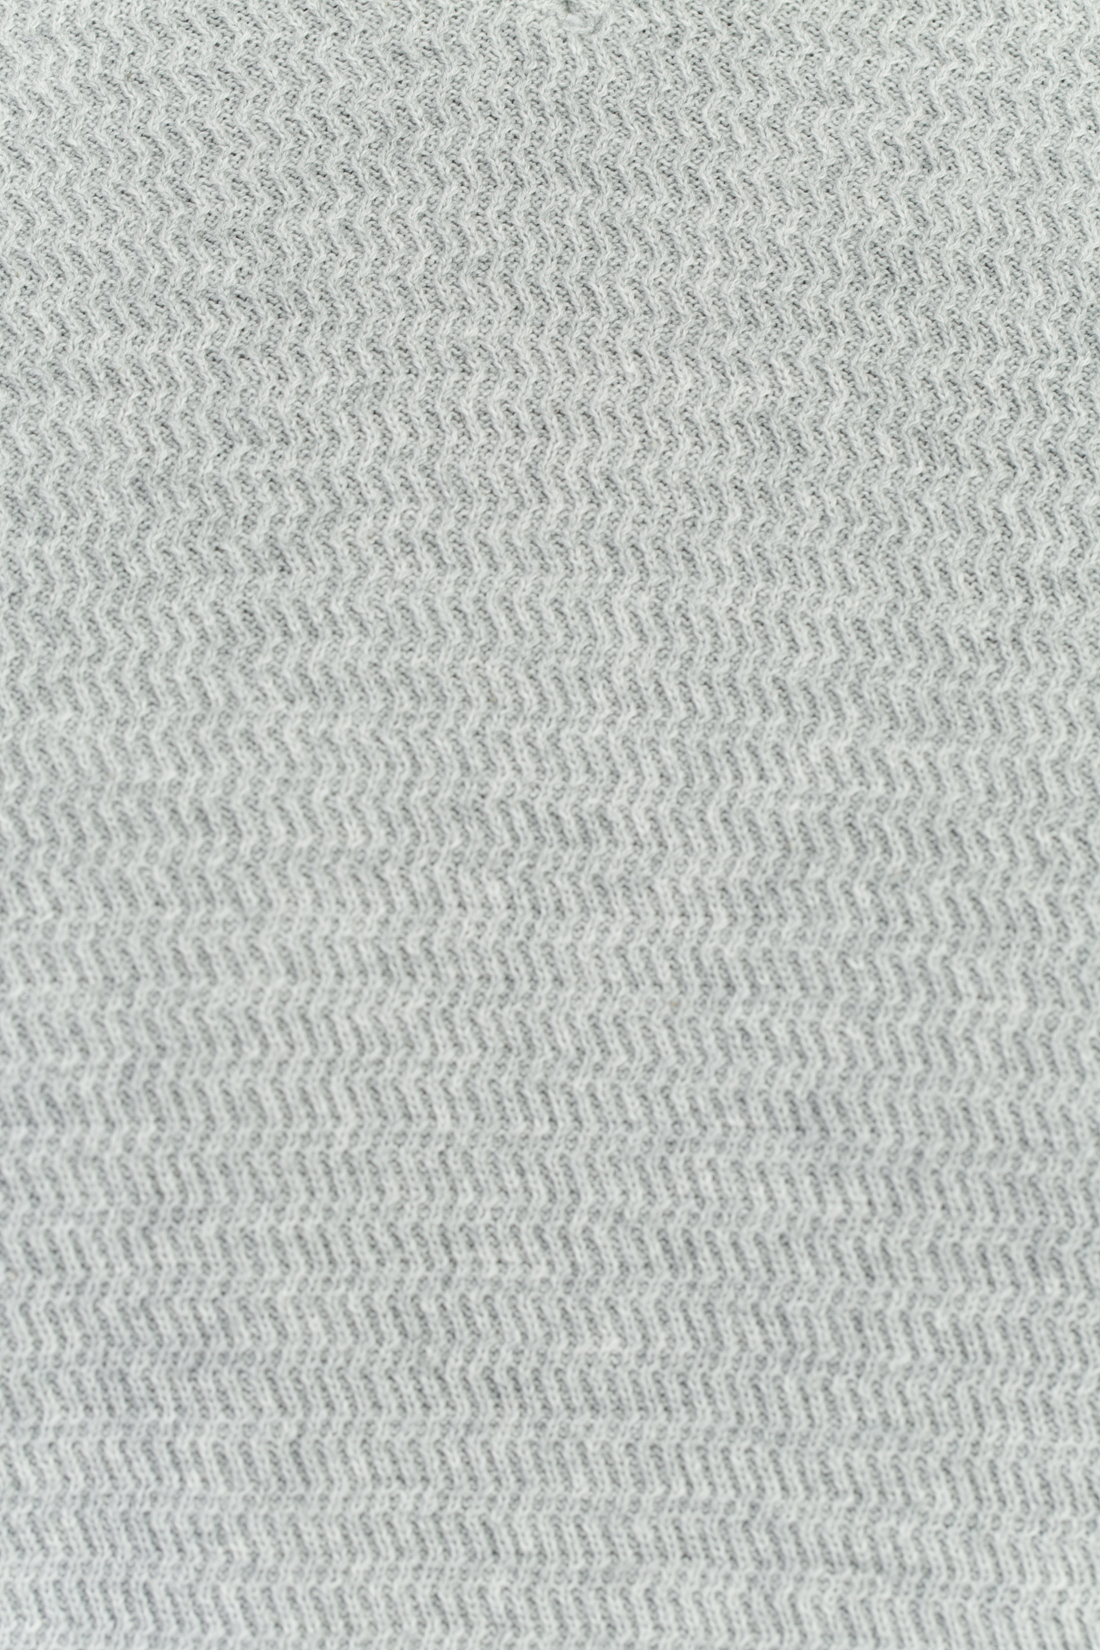 Пуловер с рельефным узором (арт. baon B637016), размер XXL, цвет silver melange#серый Пуловер с рельефным узором (арт. baon B637016) - фото 4